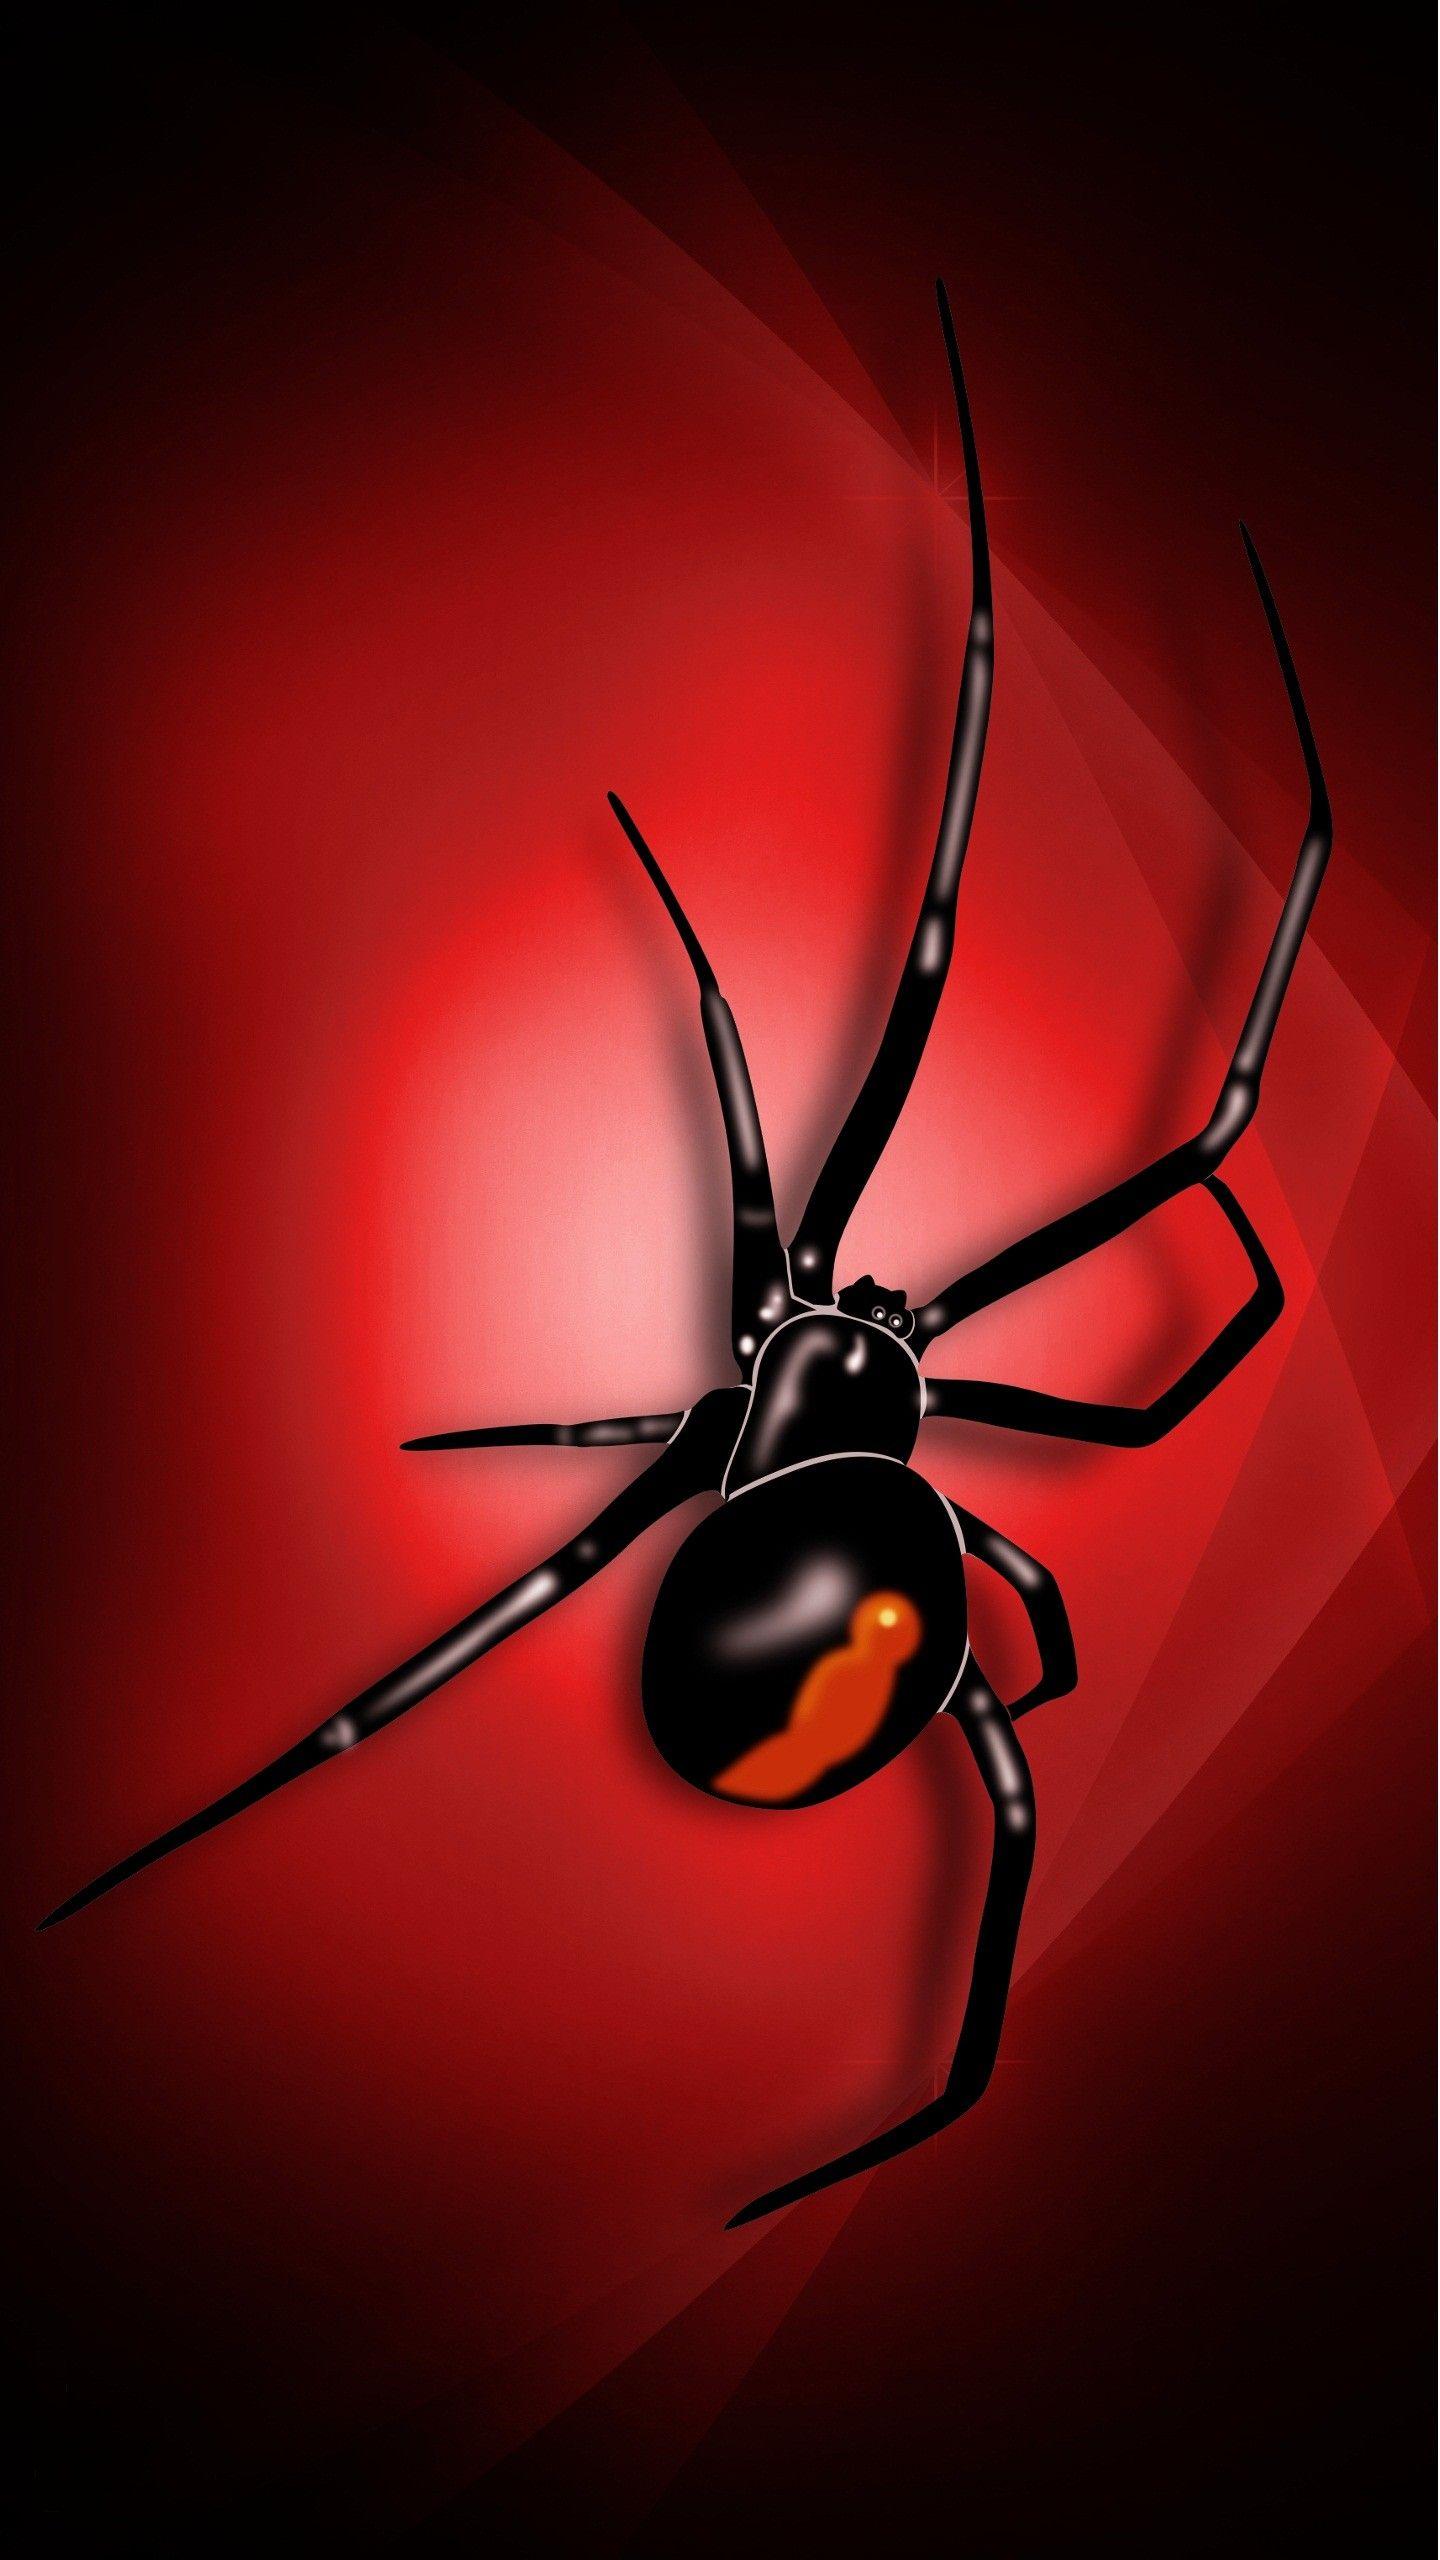 Black Widow Spiders Wallpapers - Wallpaper Cave